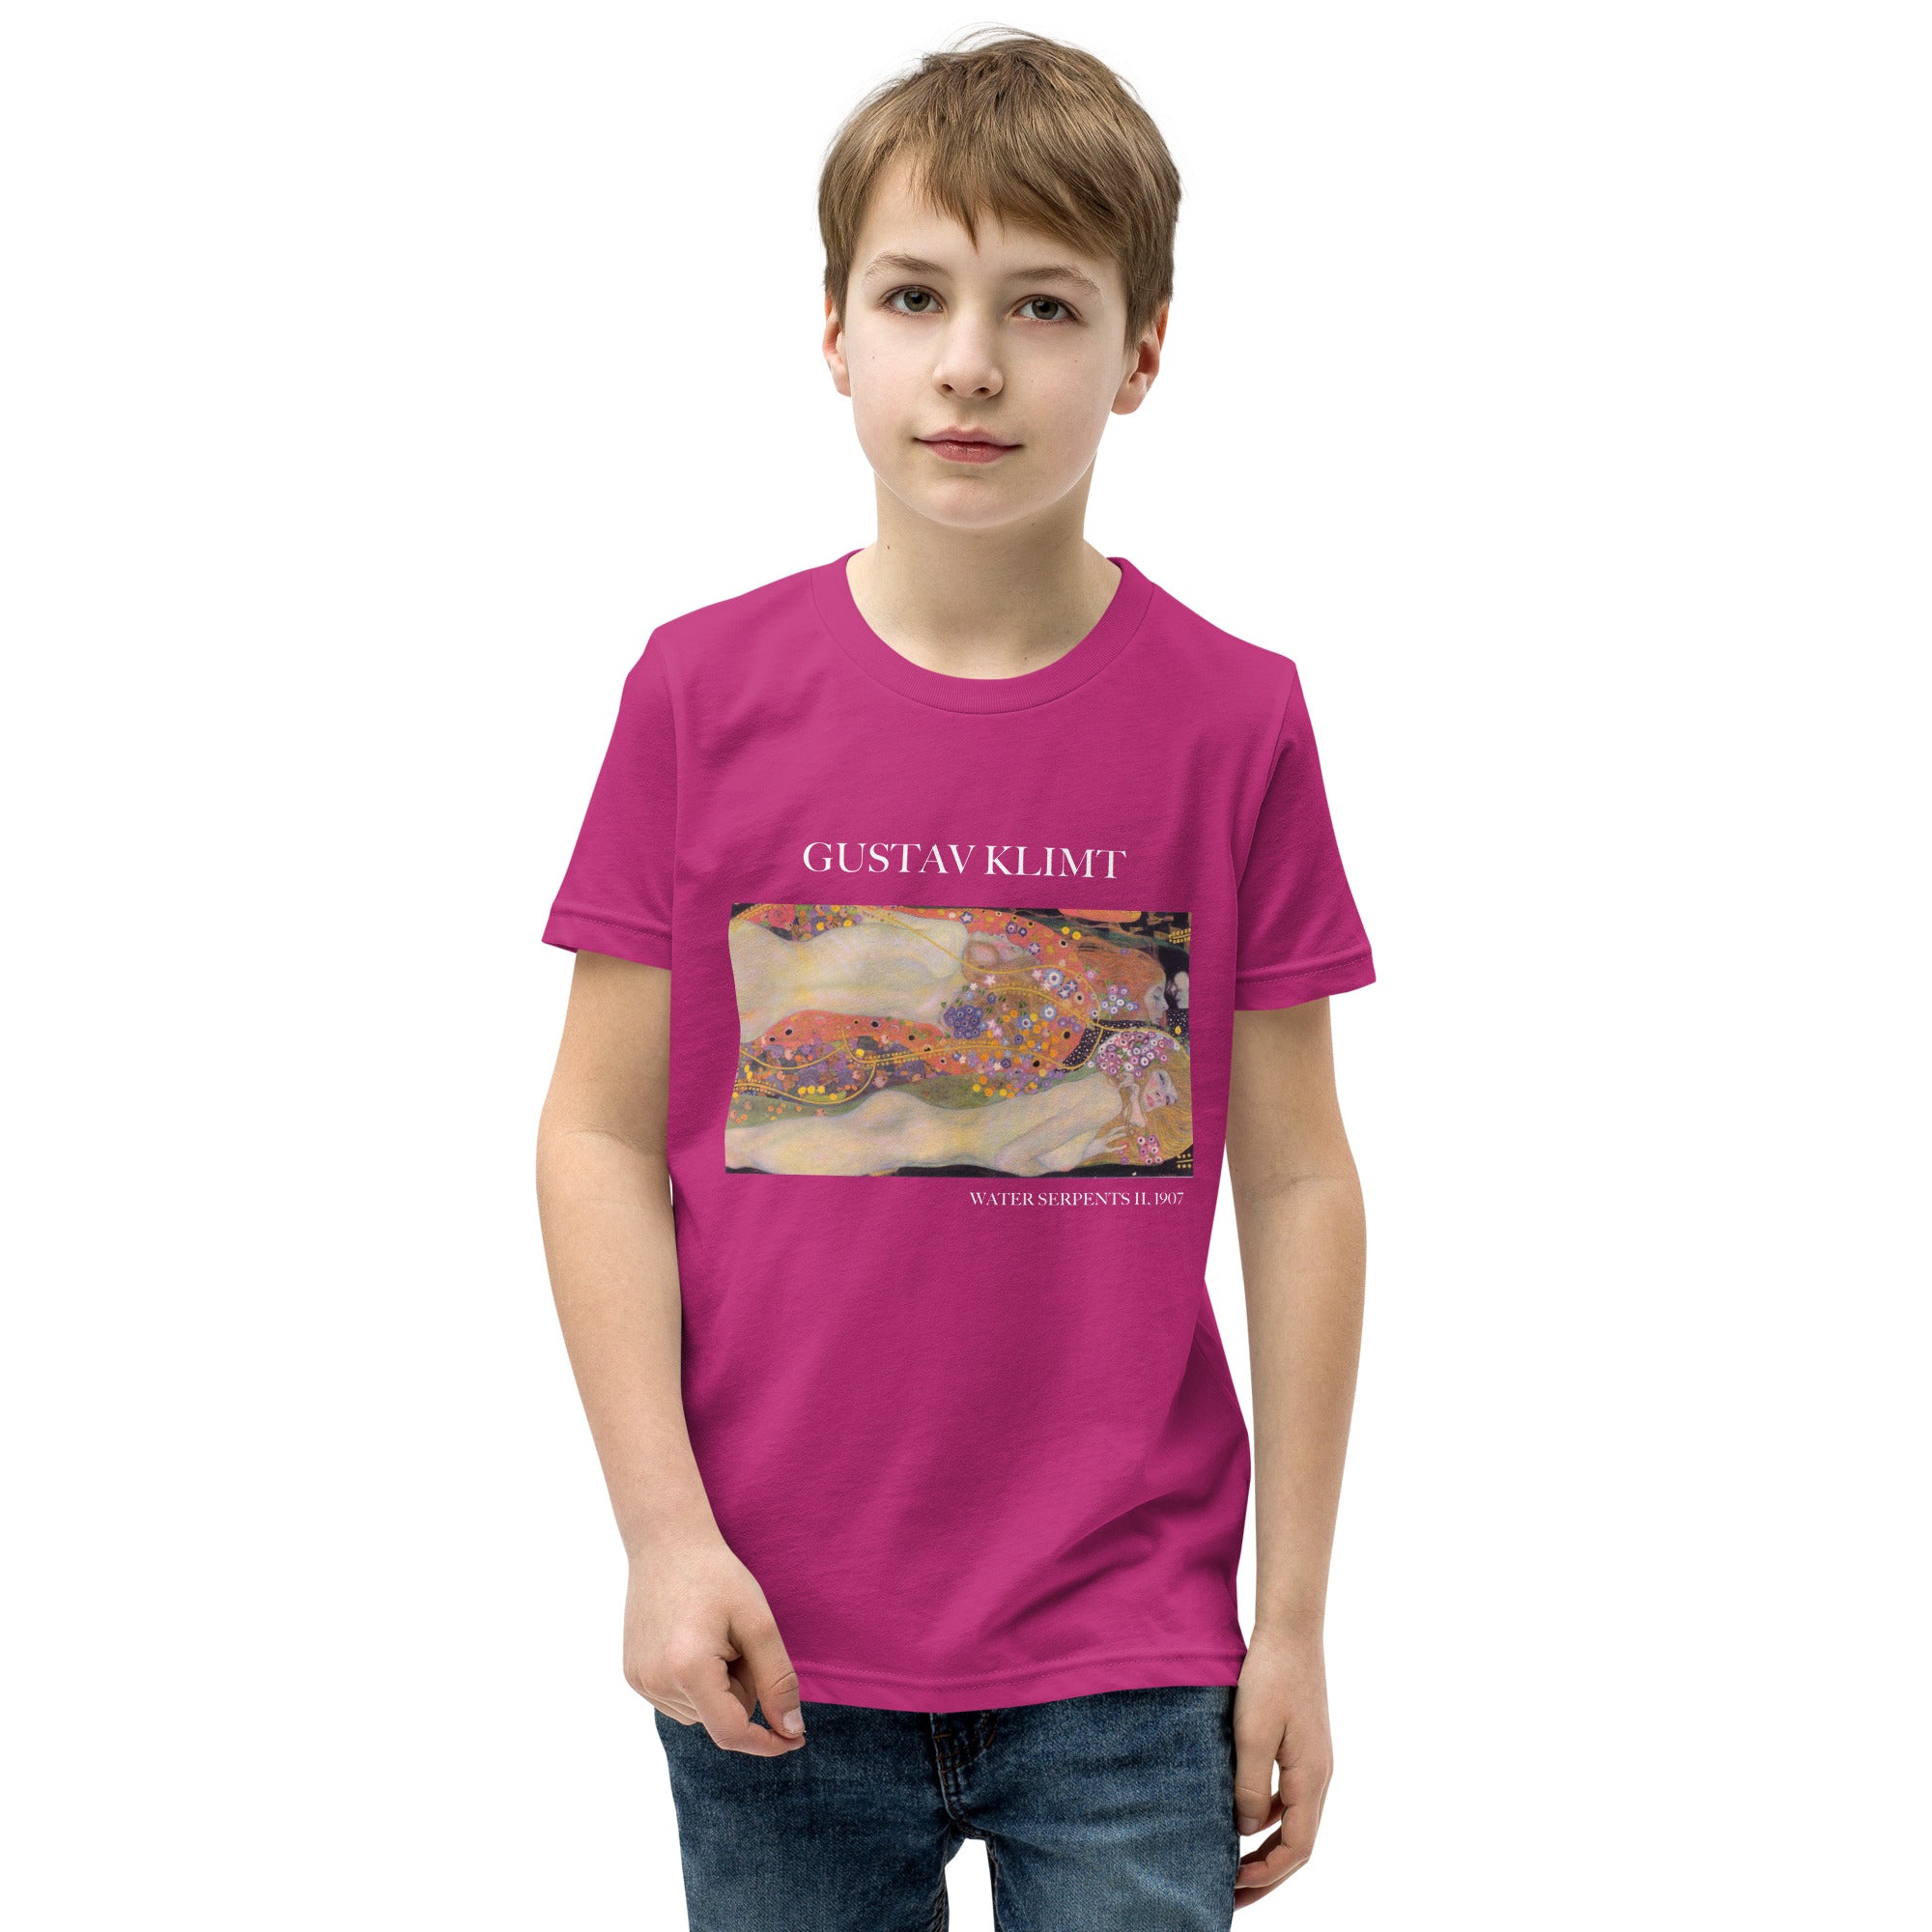 Gustav Klimt 'Water Serpents II' Famous Painting Short Sleeve T-Shirt | Premium Youth Art Tee